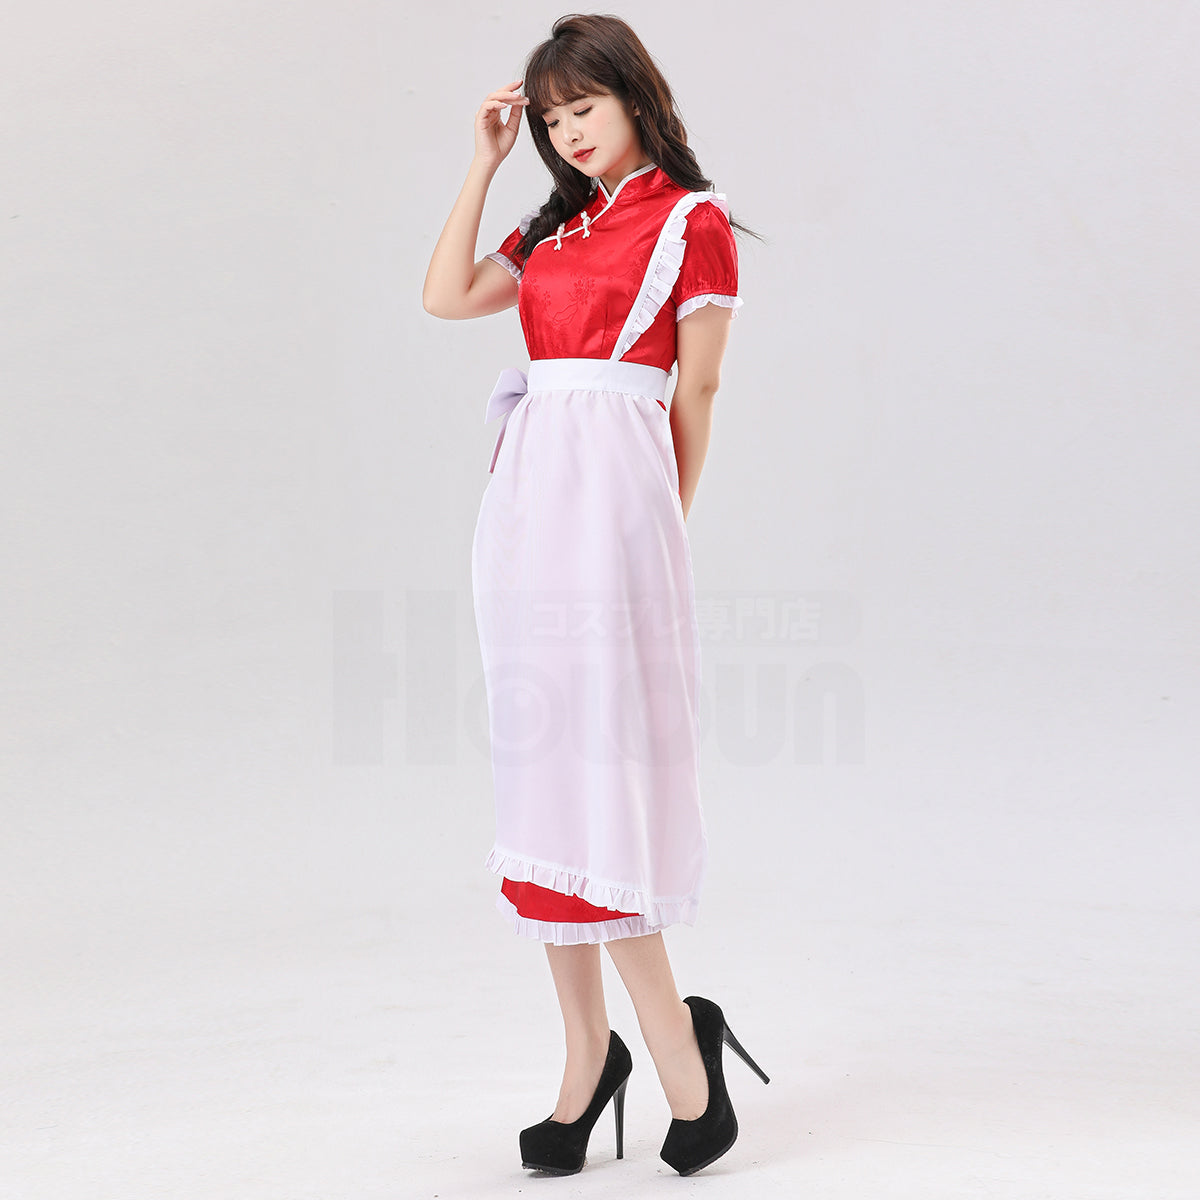 HOLOUN Lolita Maid Dress Skirt China Costume Cute Cheongsam Cafe Uniform Apron Red Color Short Sleeve Daily Wear Gift